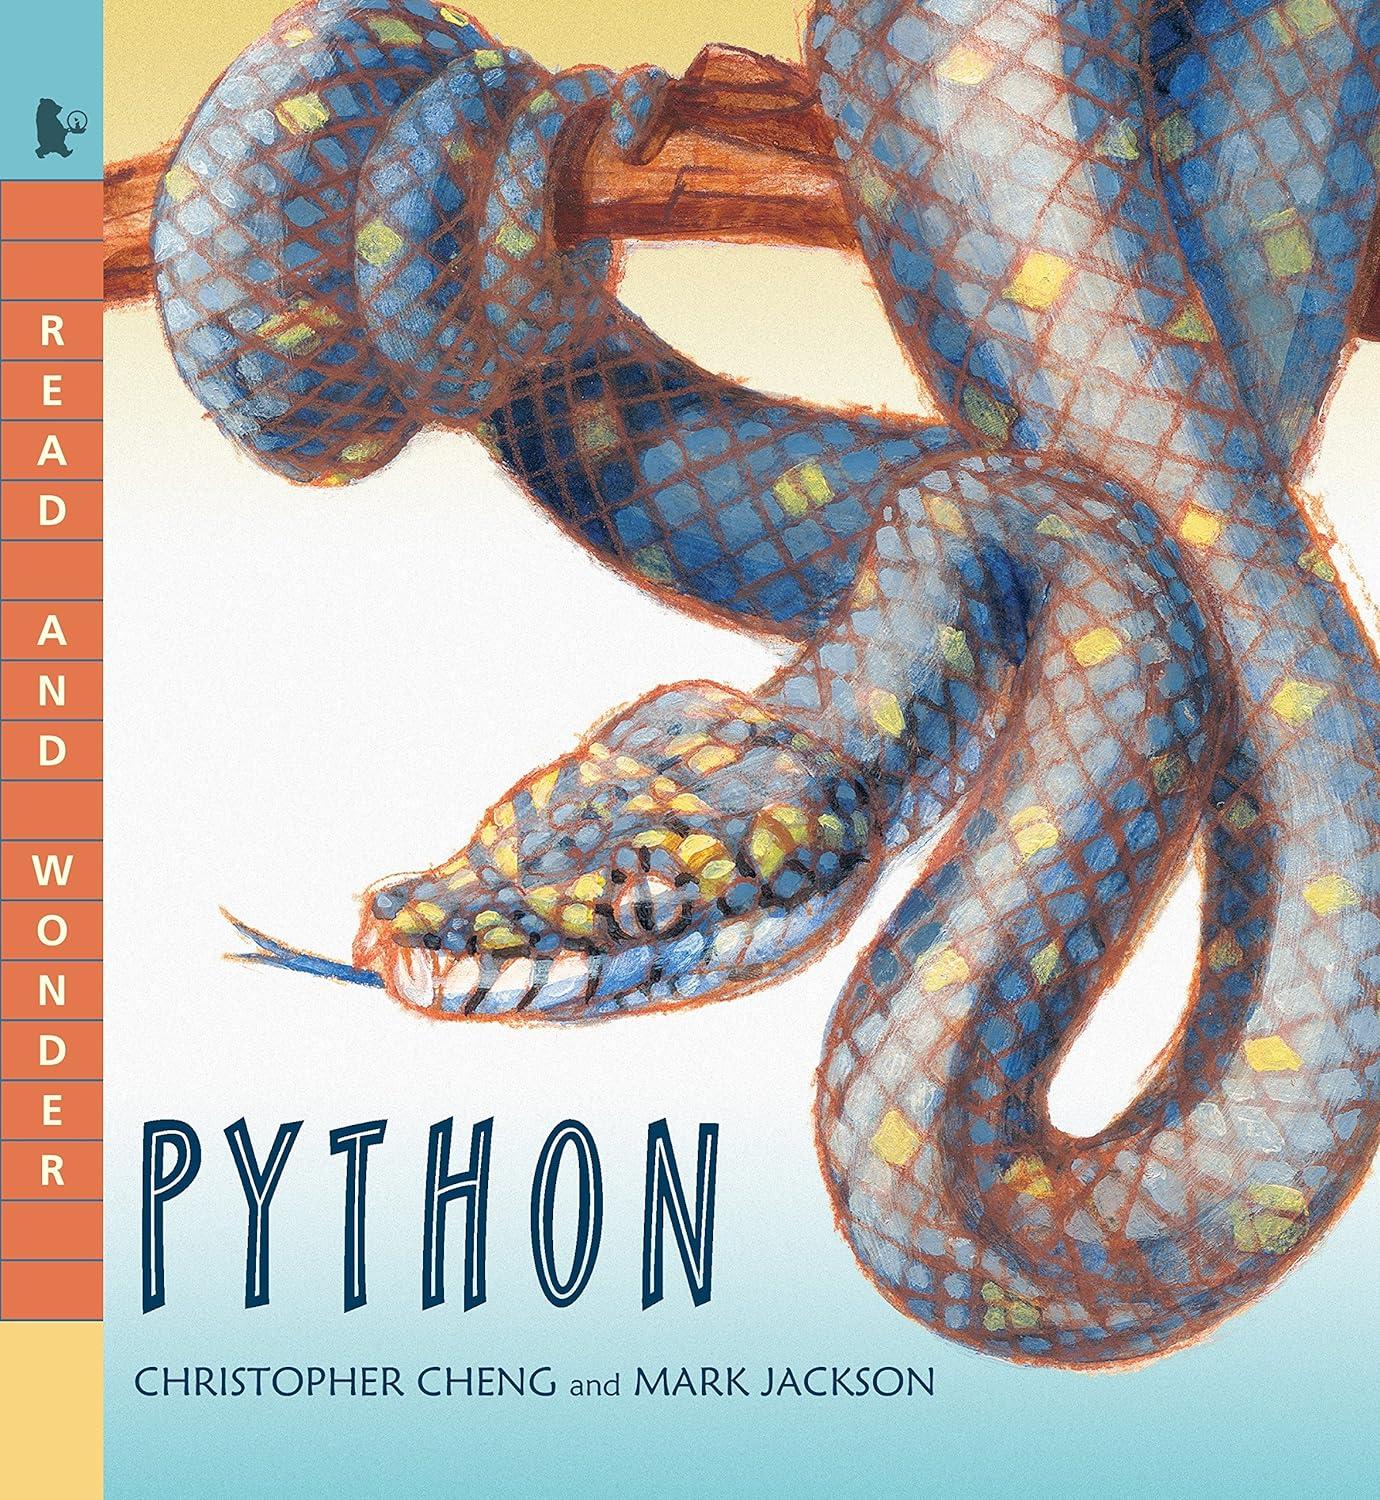 python read and wonder 1st edition christopher cheng, mark jackson 0763687731, 978-0763687731